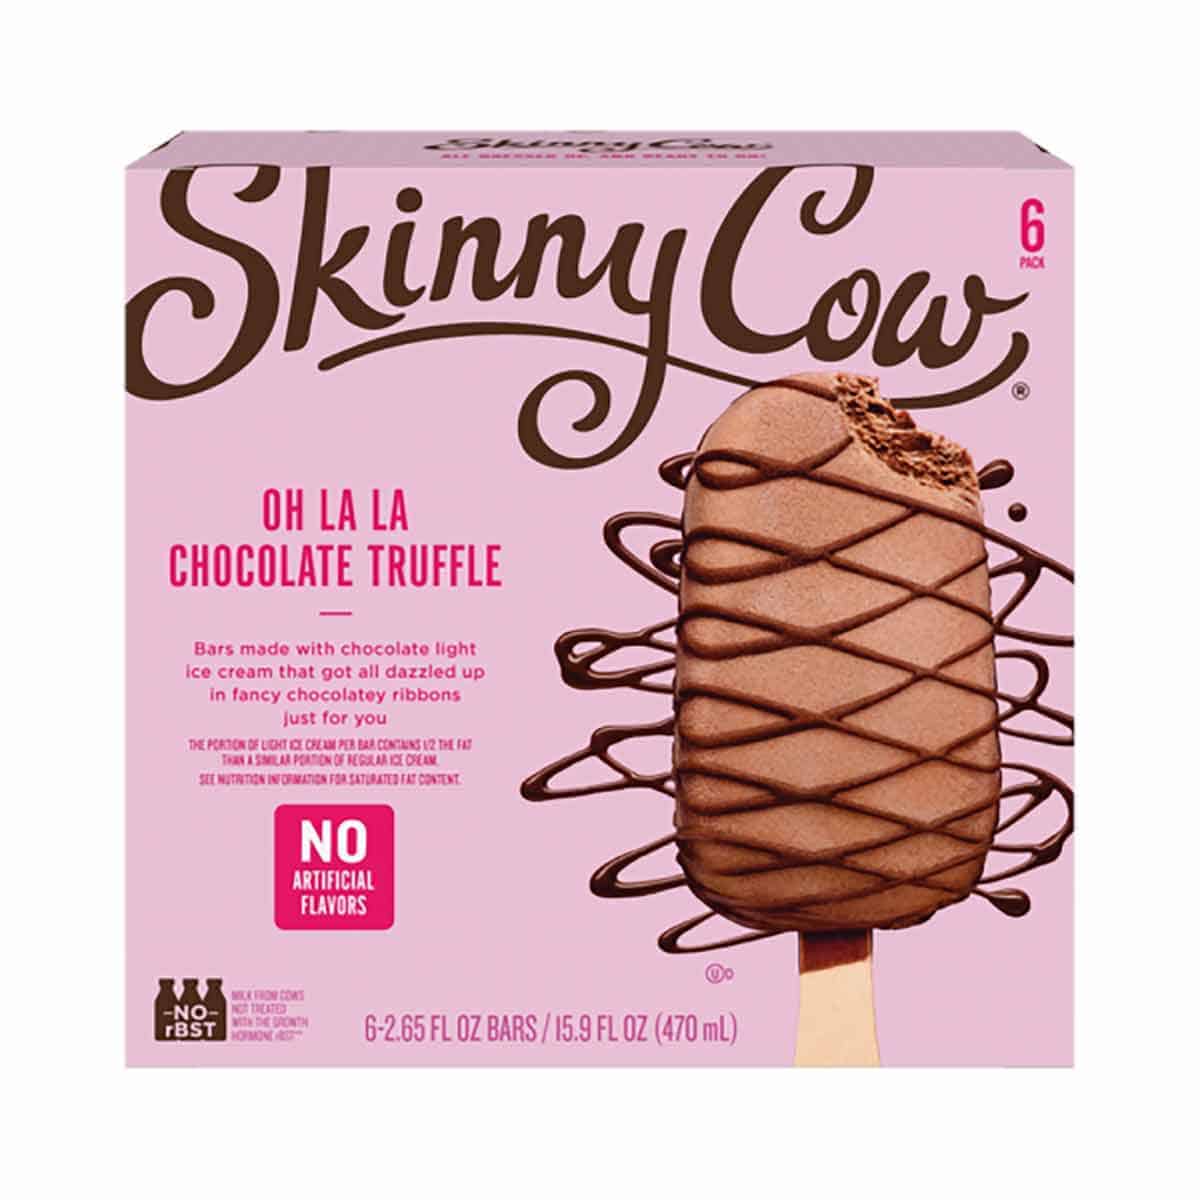 A box of Skinny Cow Oh La La Chocolate truffle bar